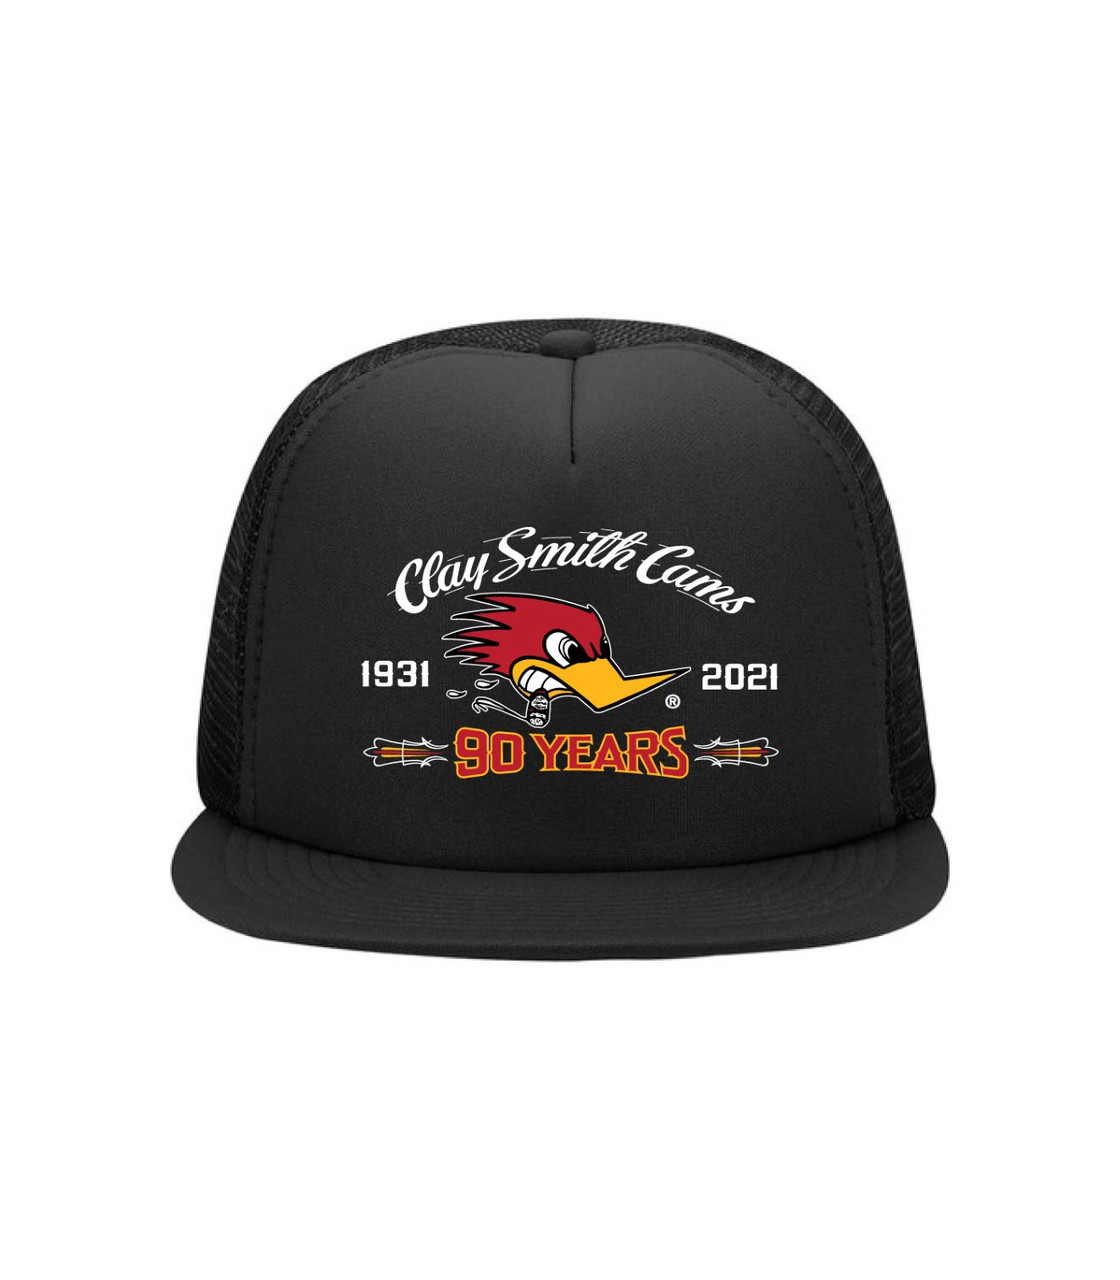 Clay Smith 90th Celebration Foam Trucker Hat 